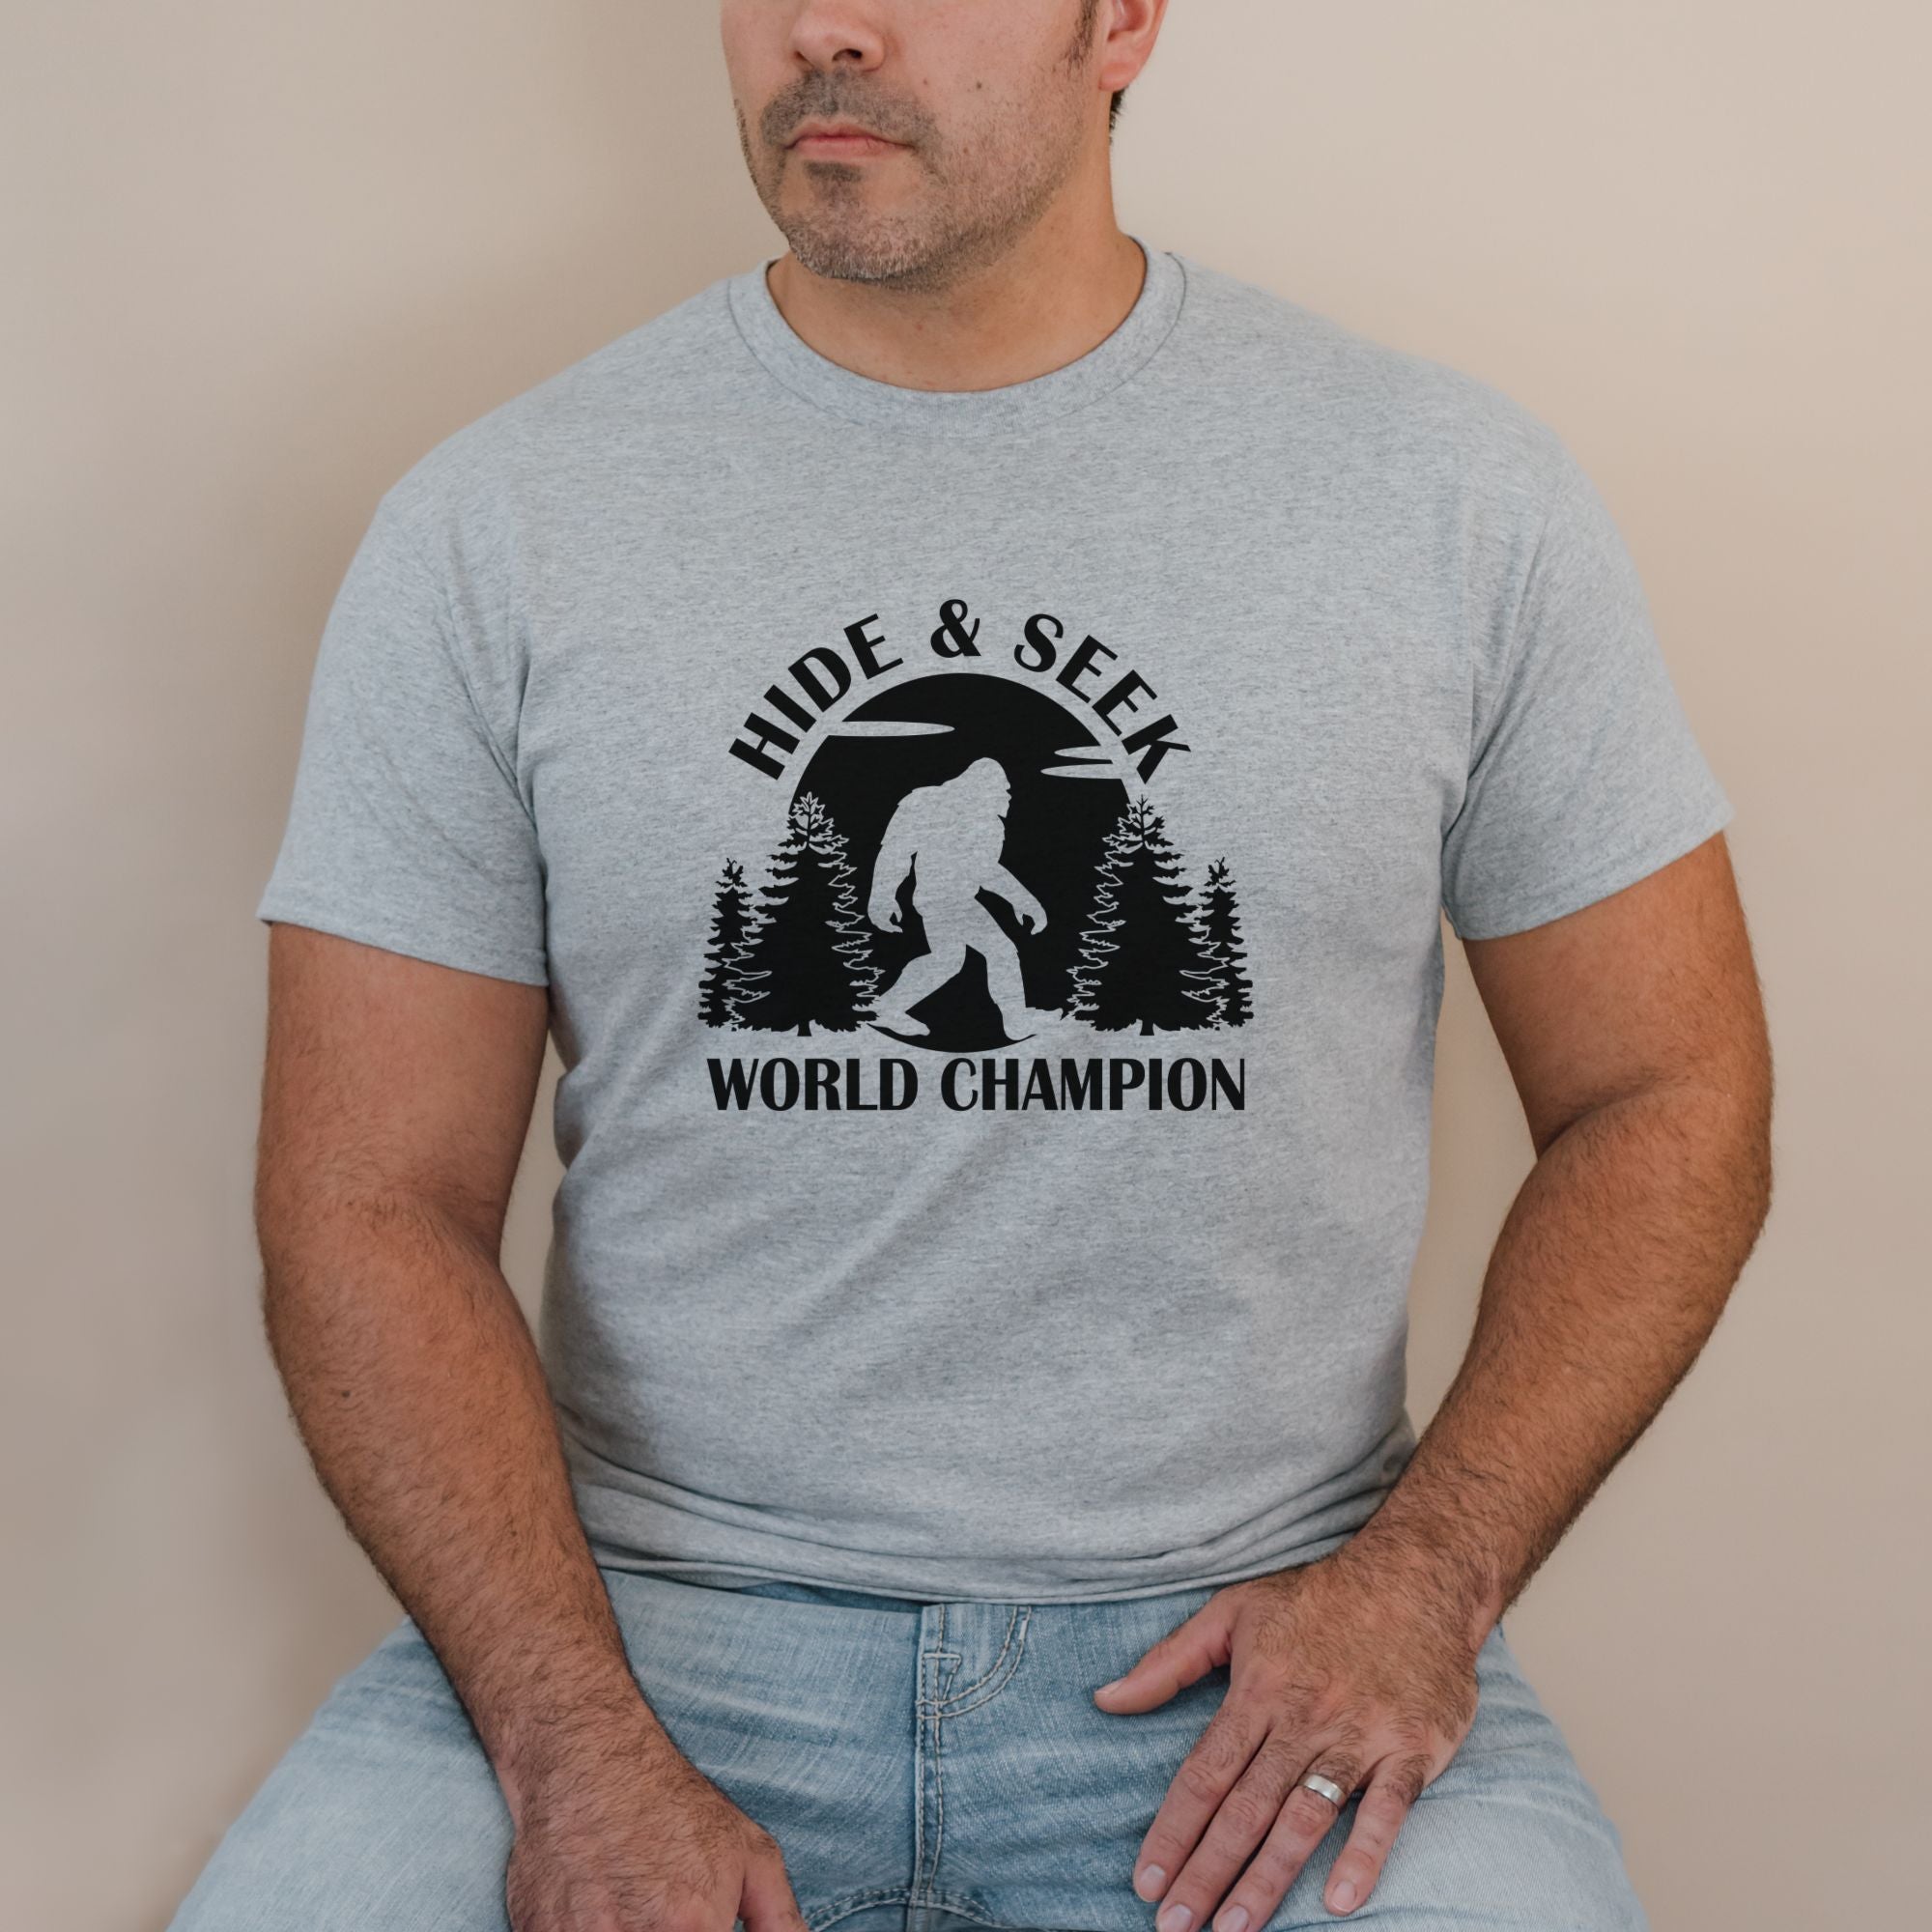 Bigfoot Camping Shirt for Men, Sasquatch *UNISEX FIT*-208 Tees Wholesale, Idaho